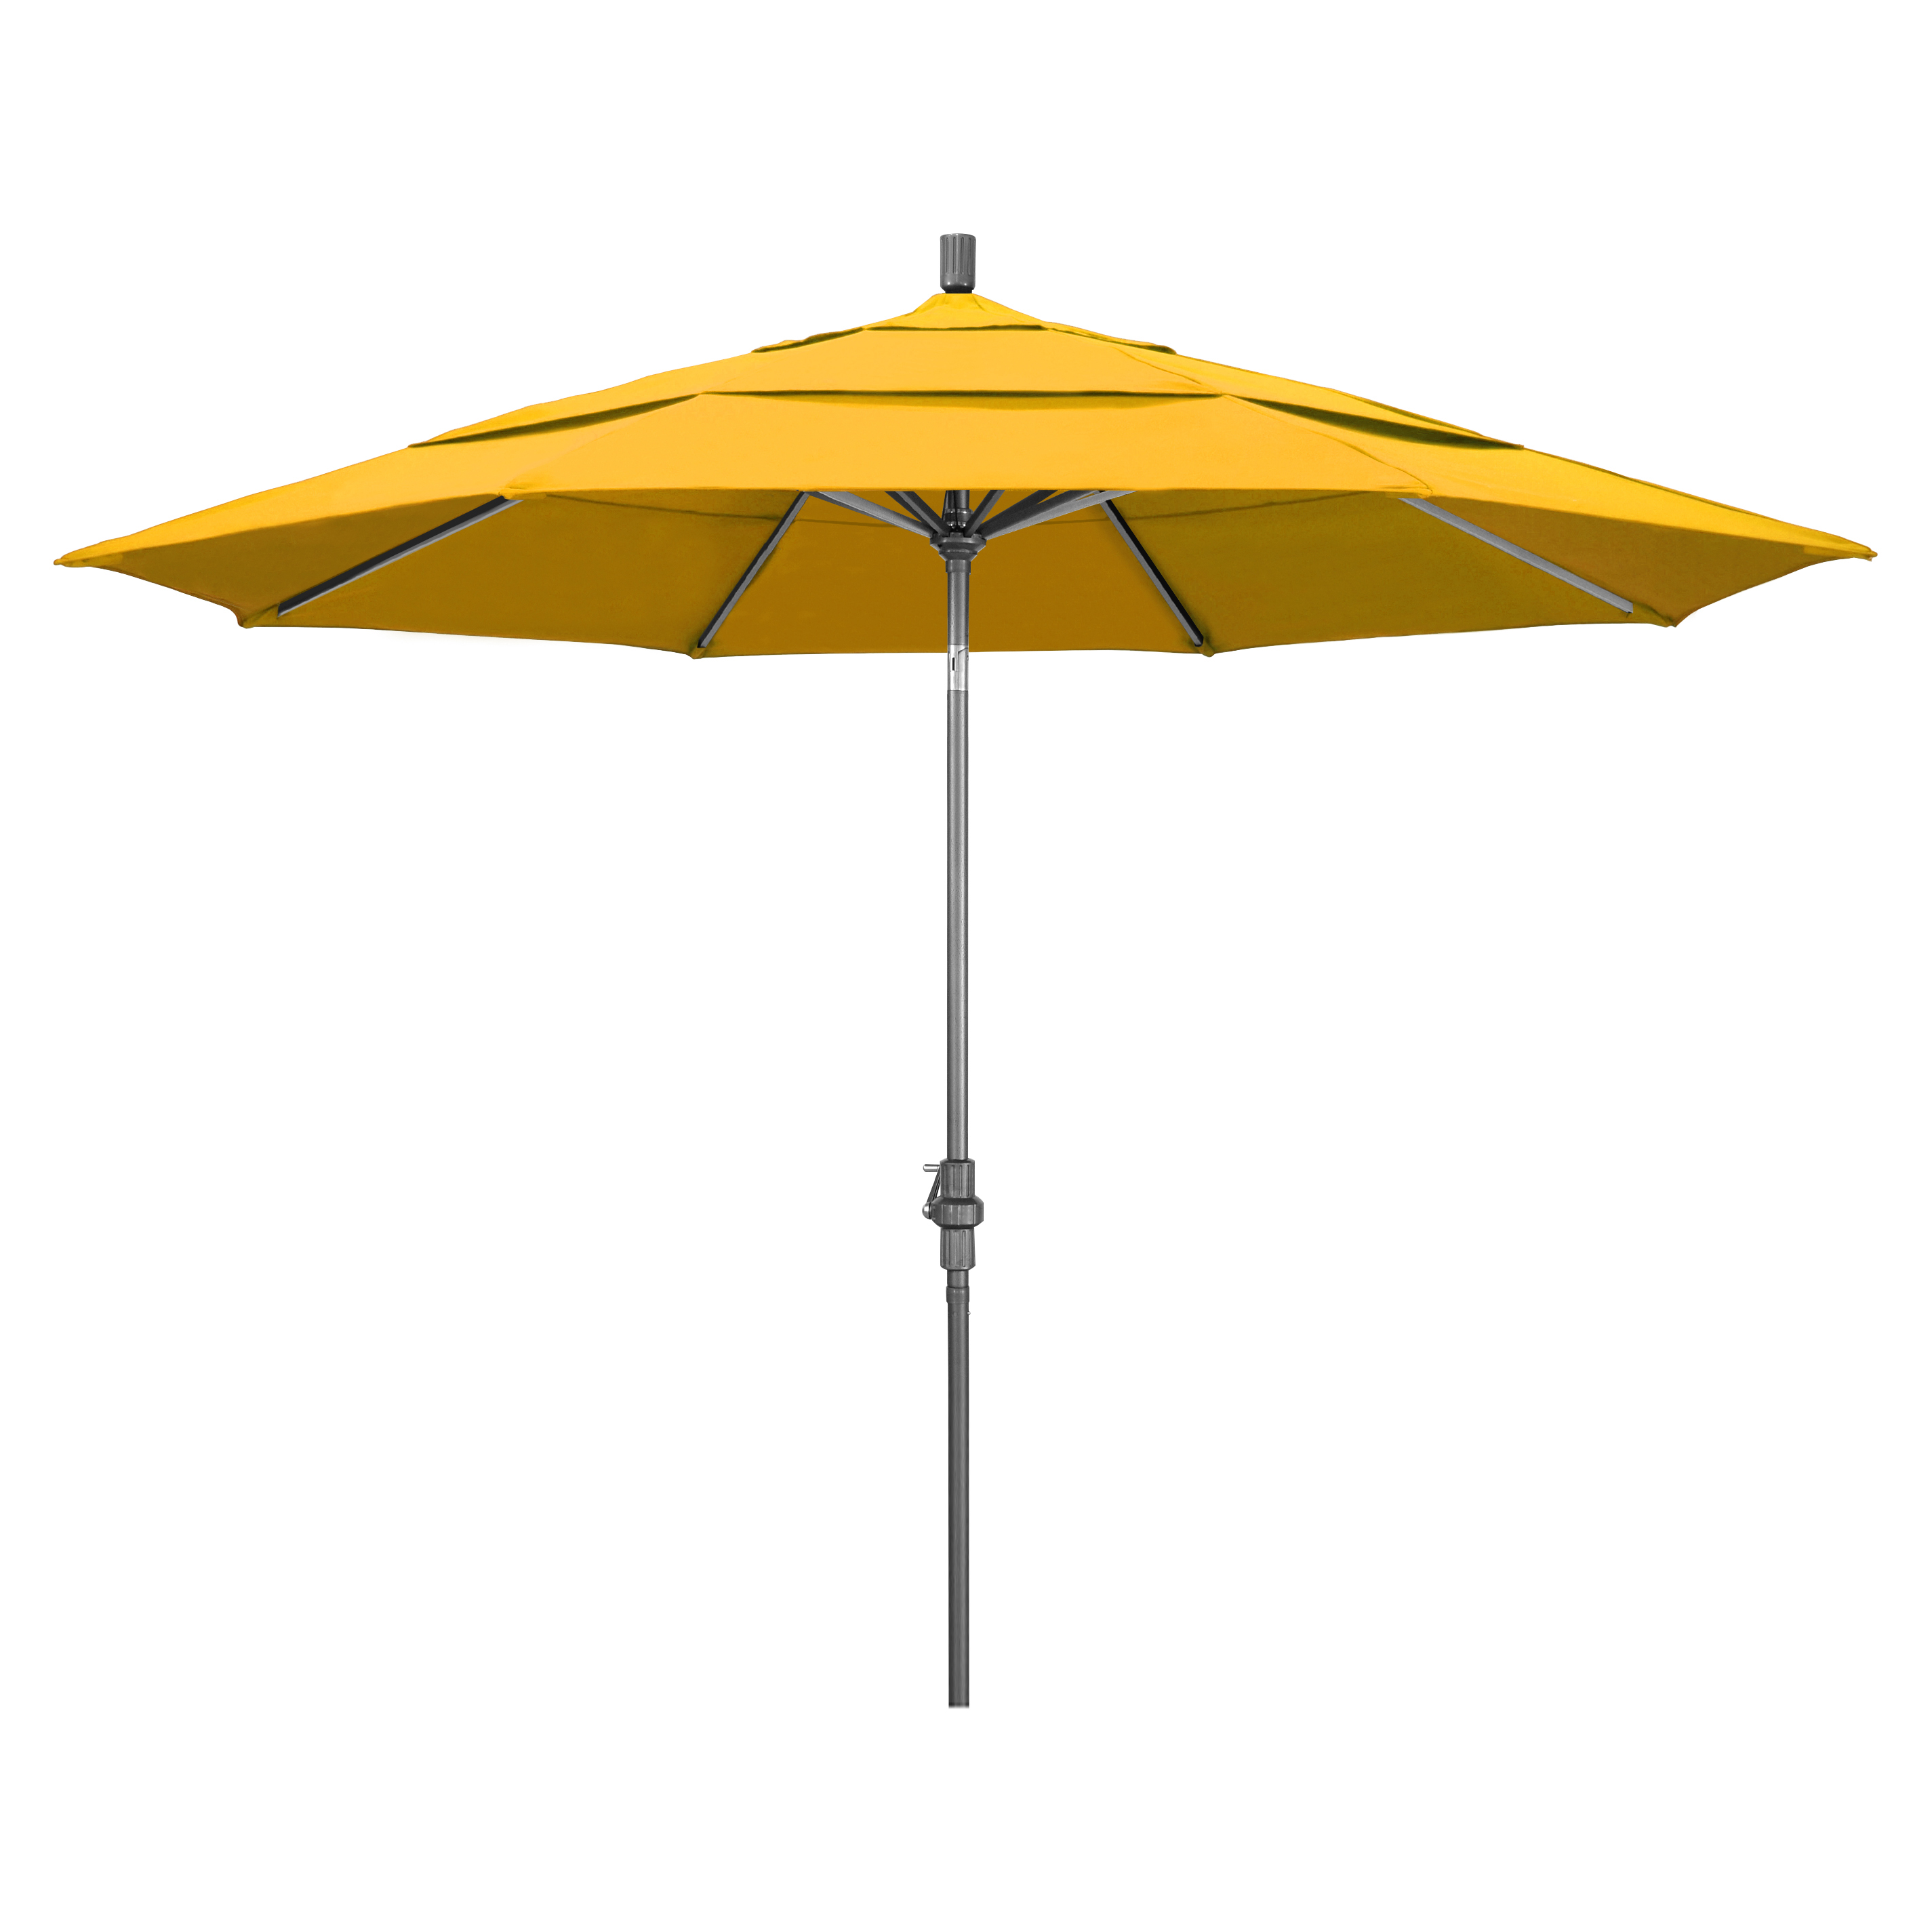 California Umbrella Golden State Market Tilt Pacifica Patio Umbrella, Multiple Colors - image 1 of 3